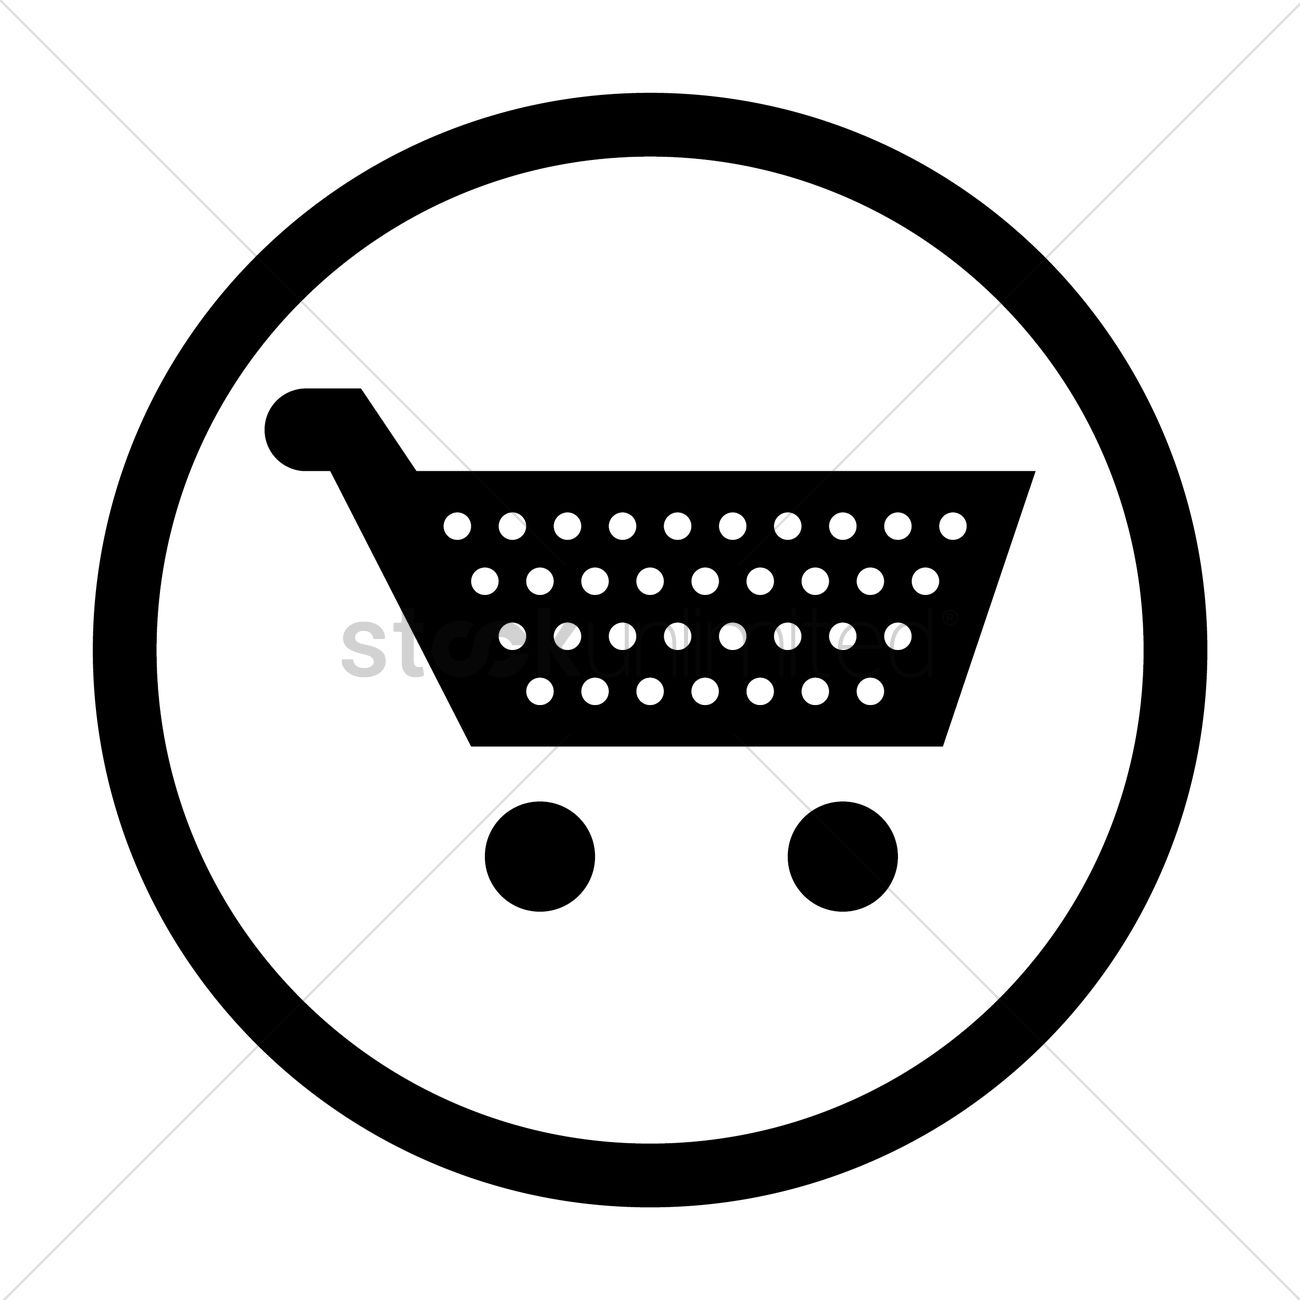 Flat Buy Online Icon (PSD) | Psdblast